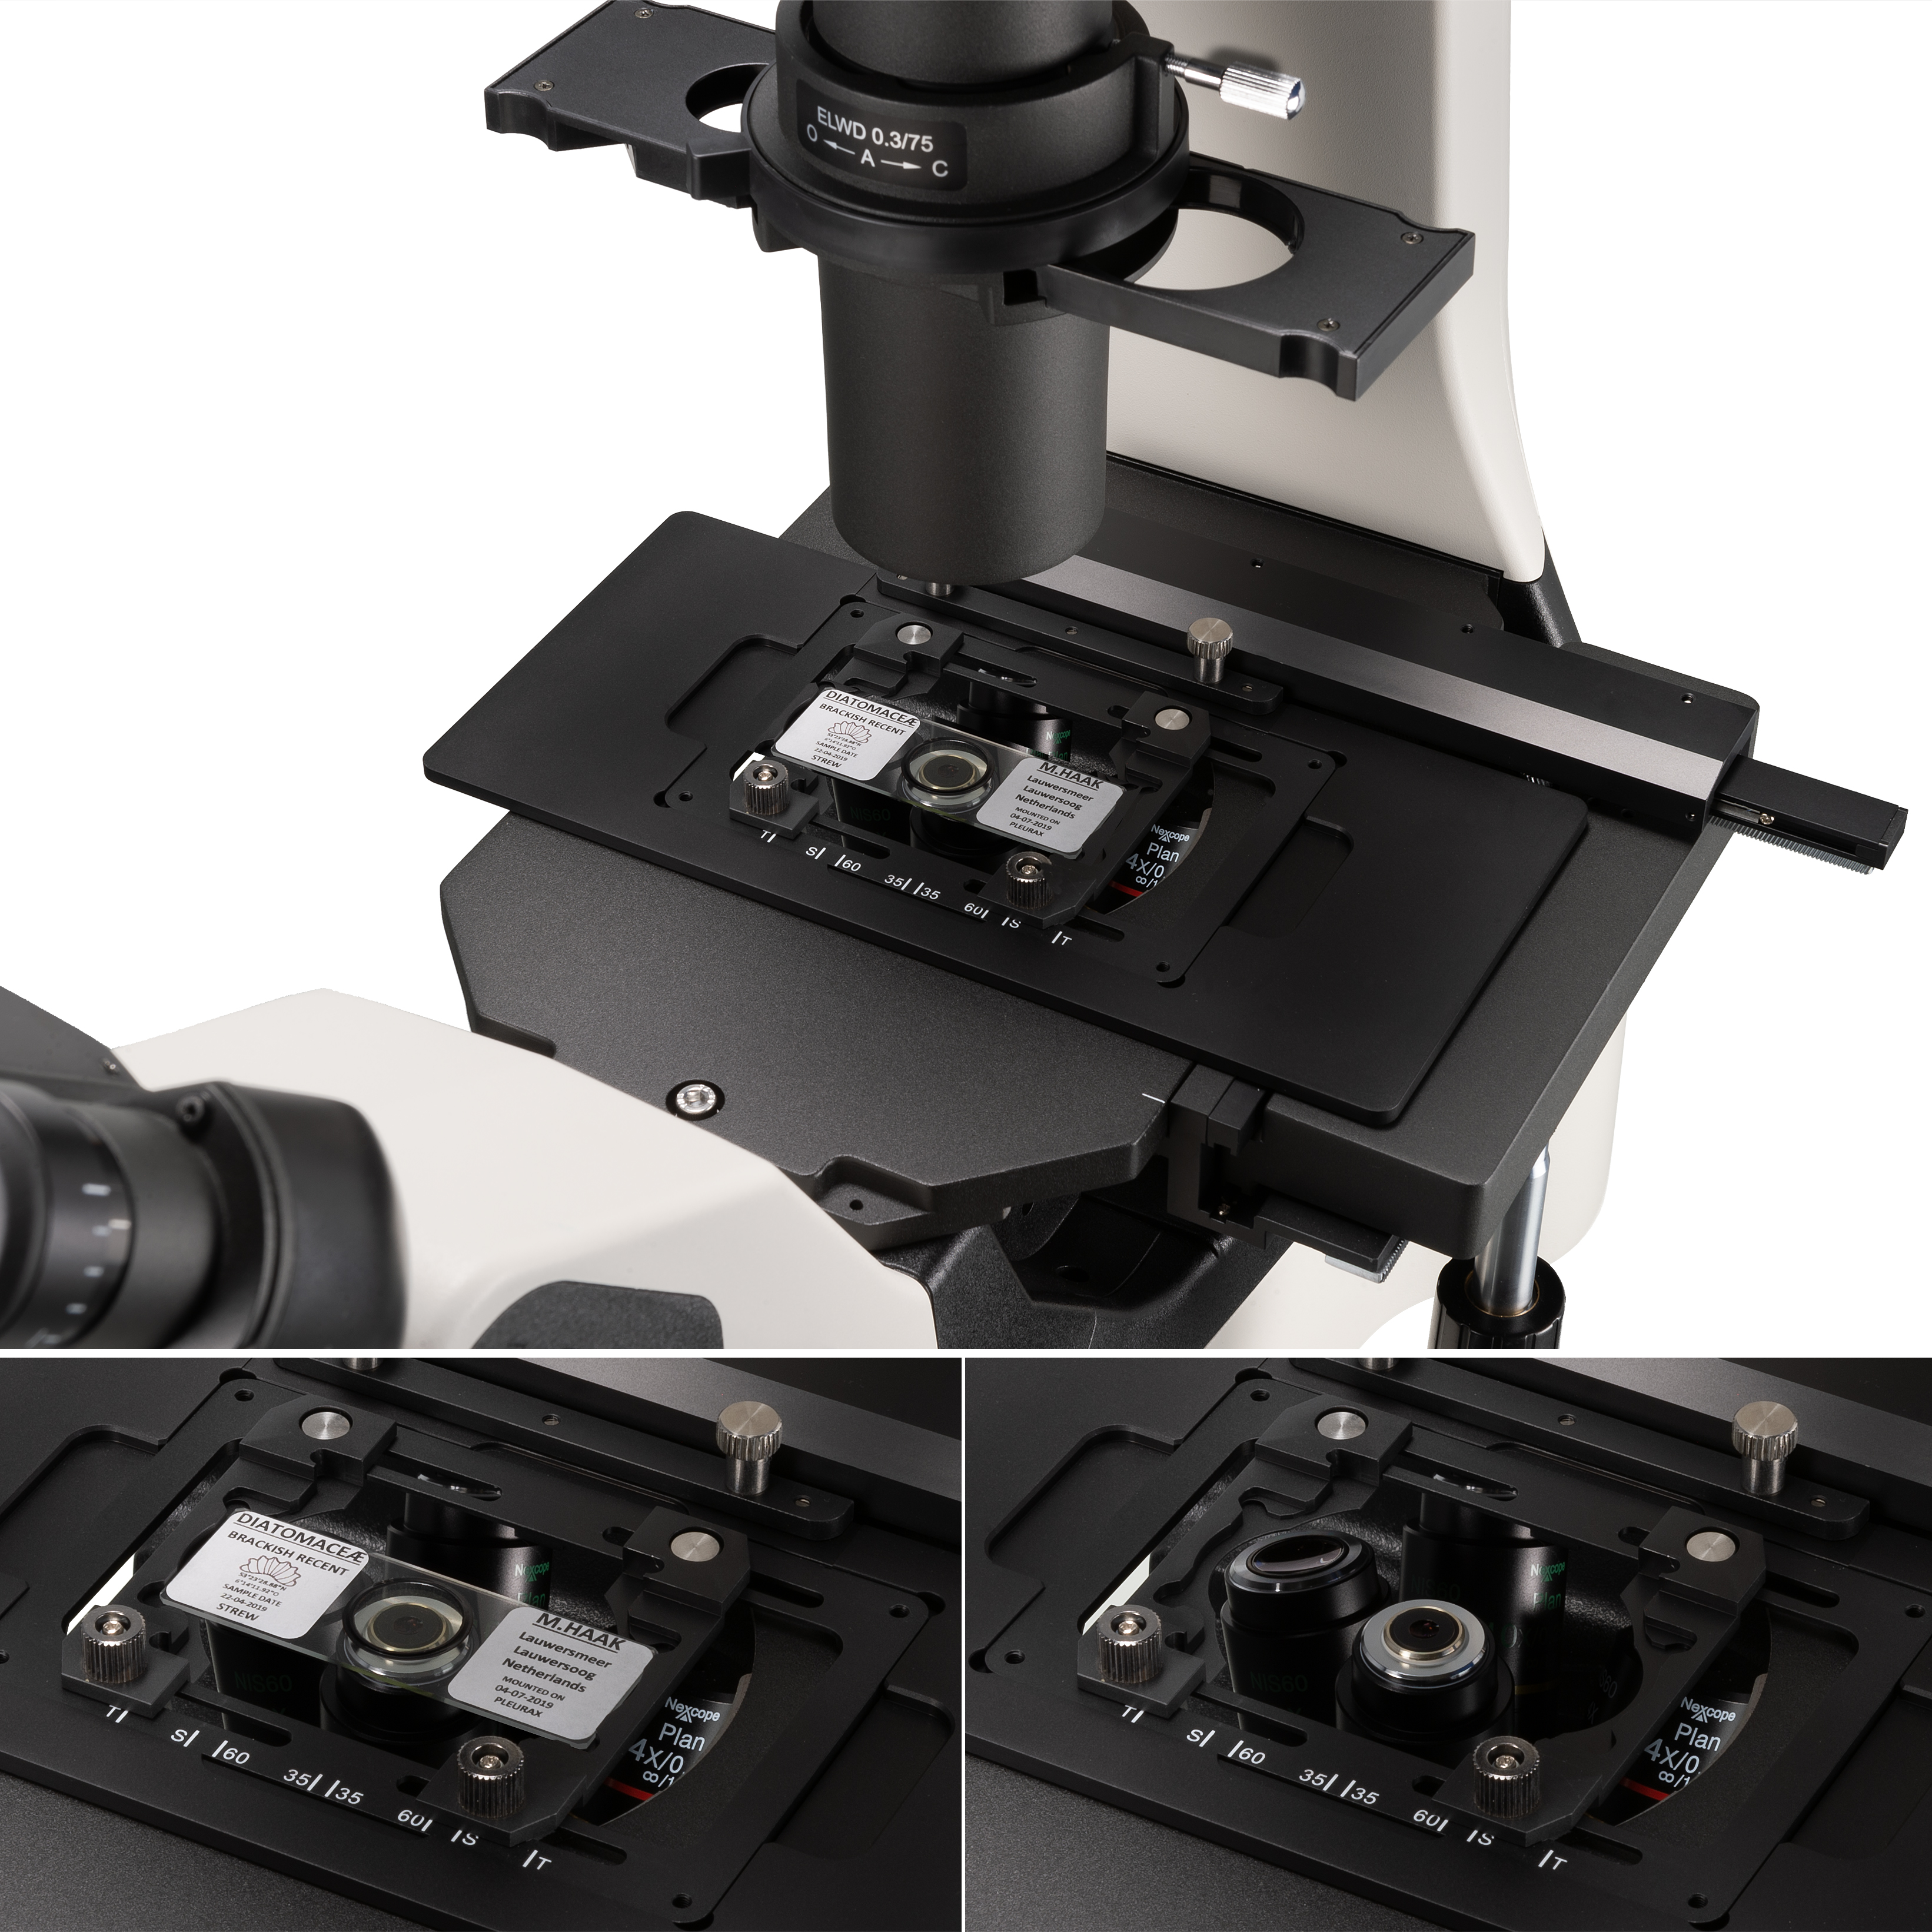 Nexcope NIB610 professional inverted laboratory microscope